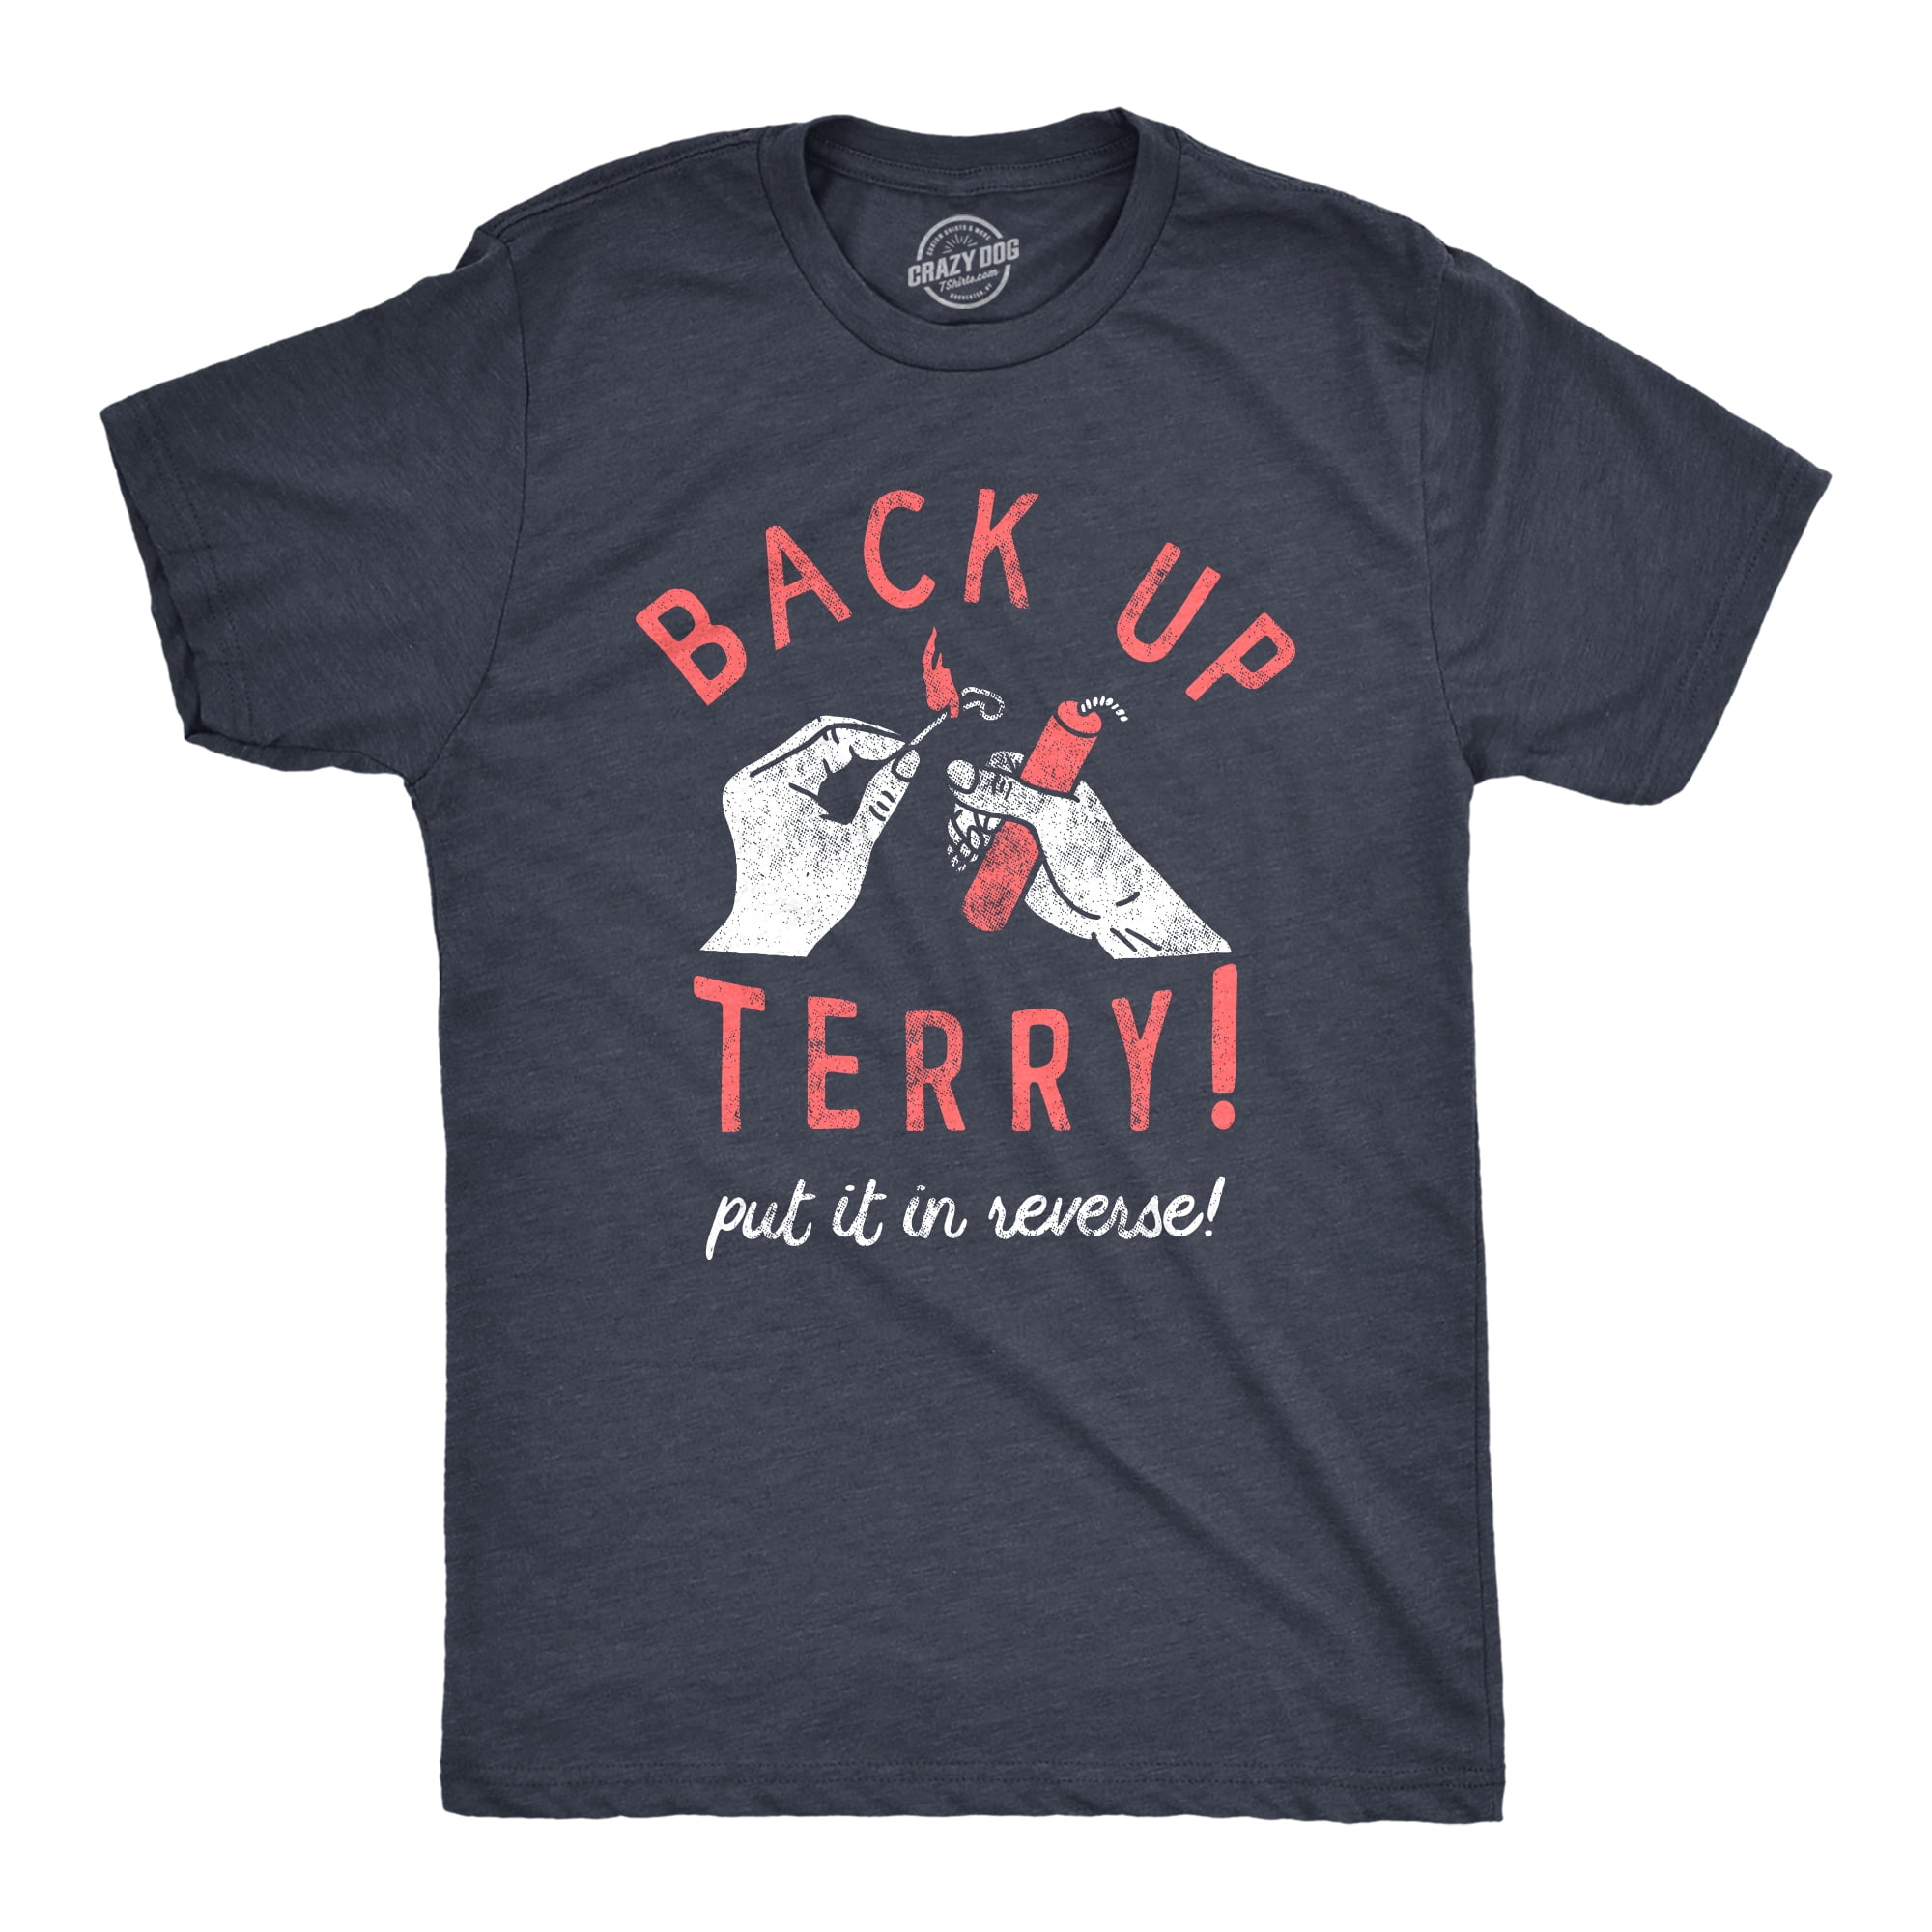 Put it in reverse, Terry! Loving these Reverse Retro jerseys 😍